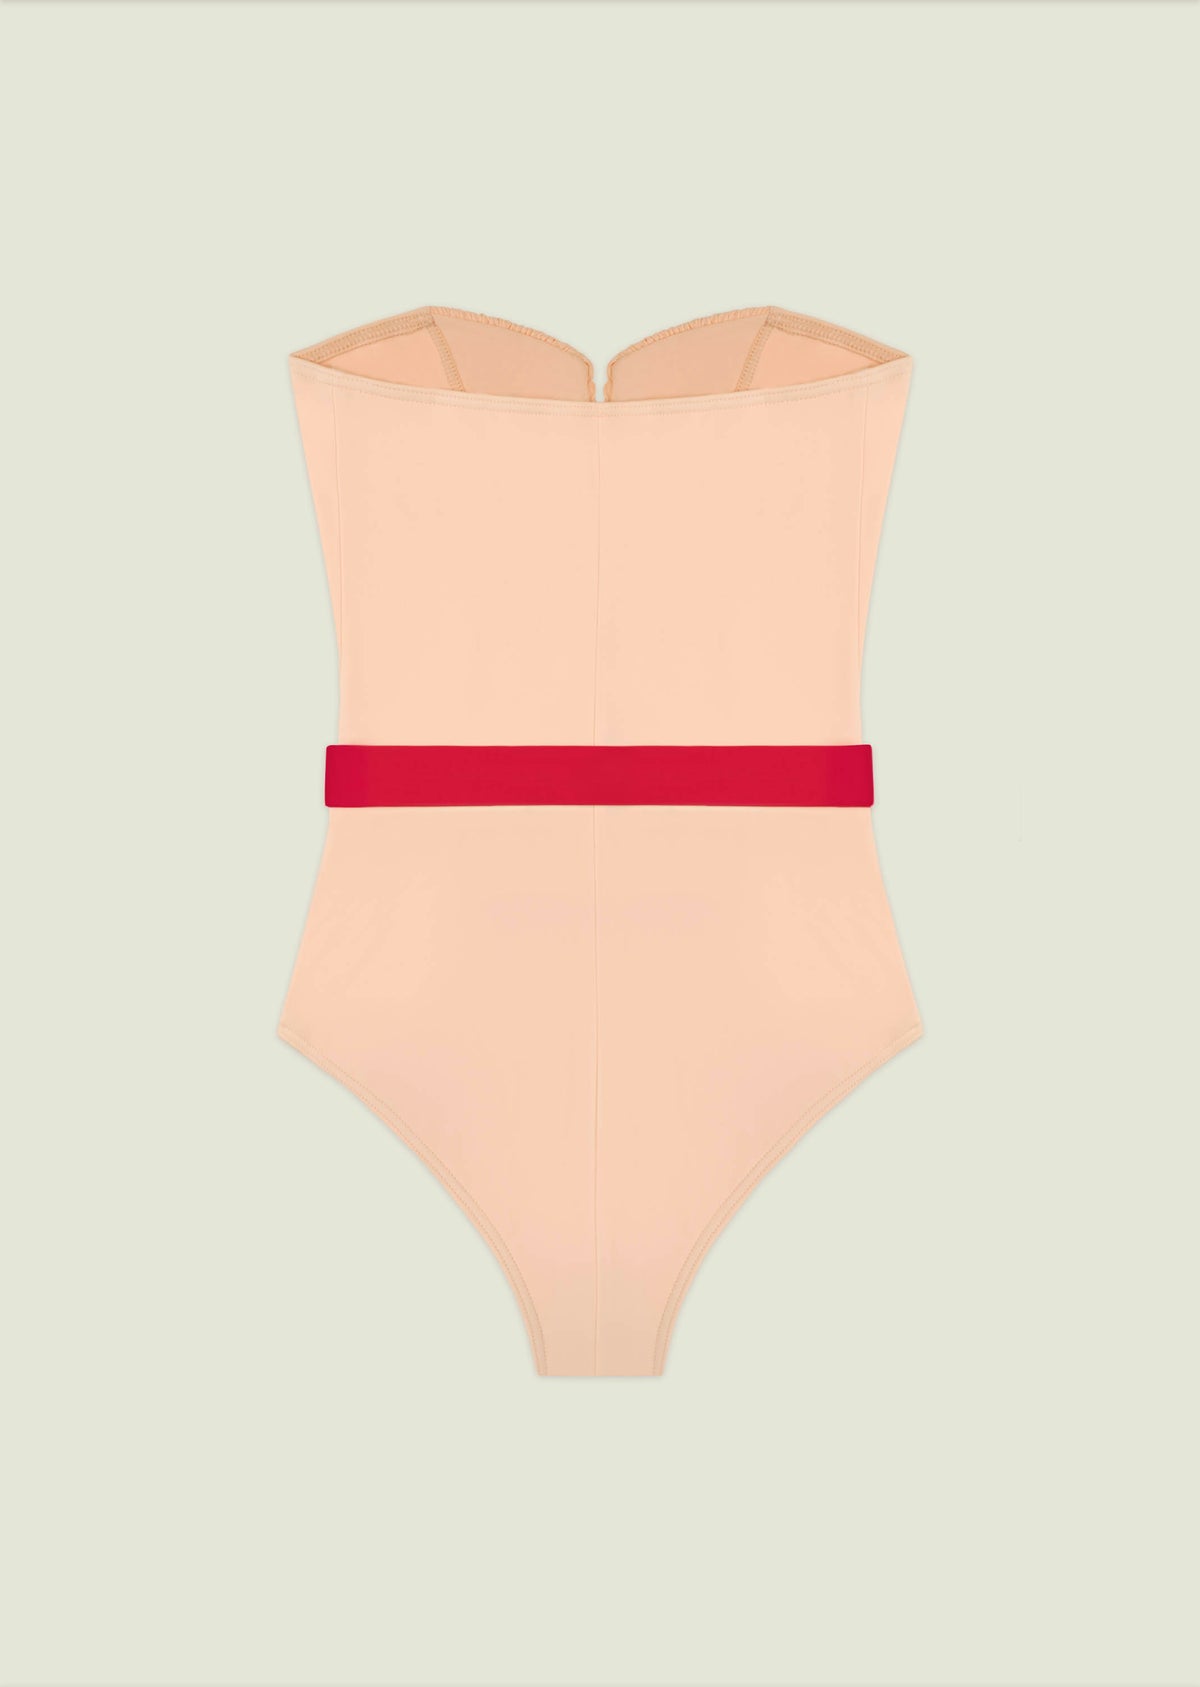 Calypso - Delicate / Peach - One-piece swimsuit